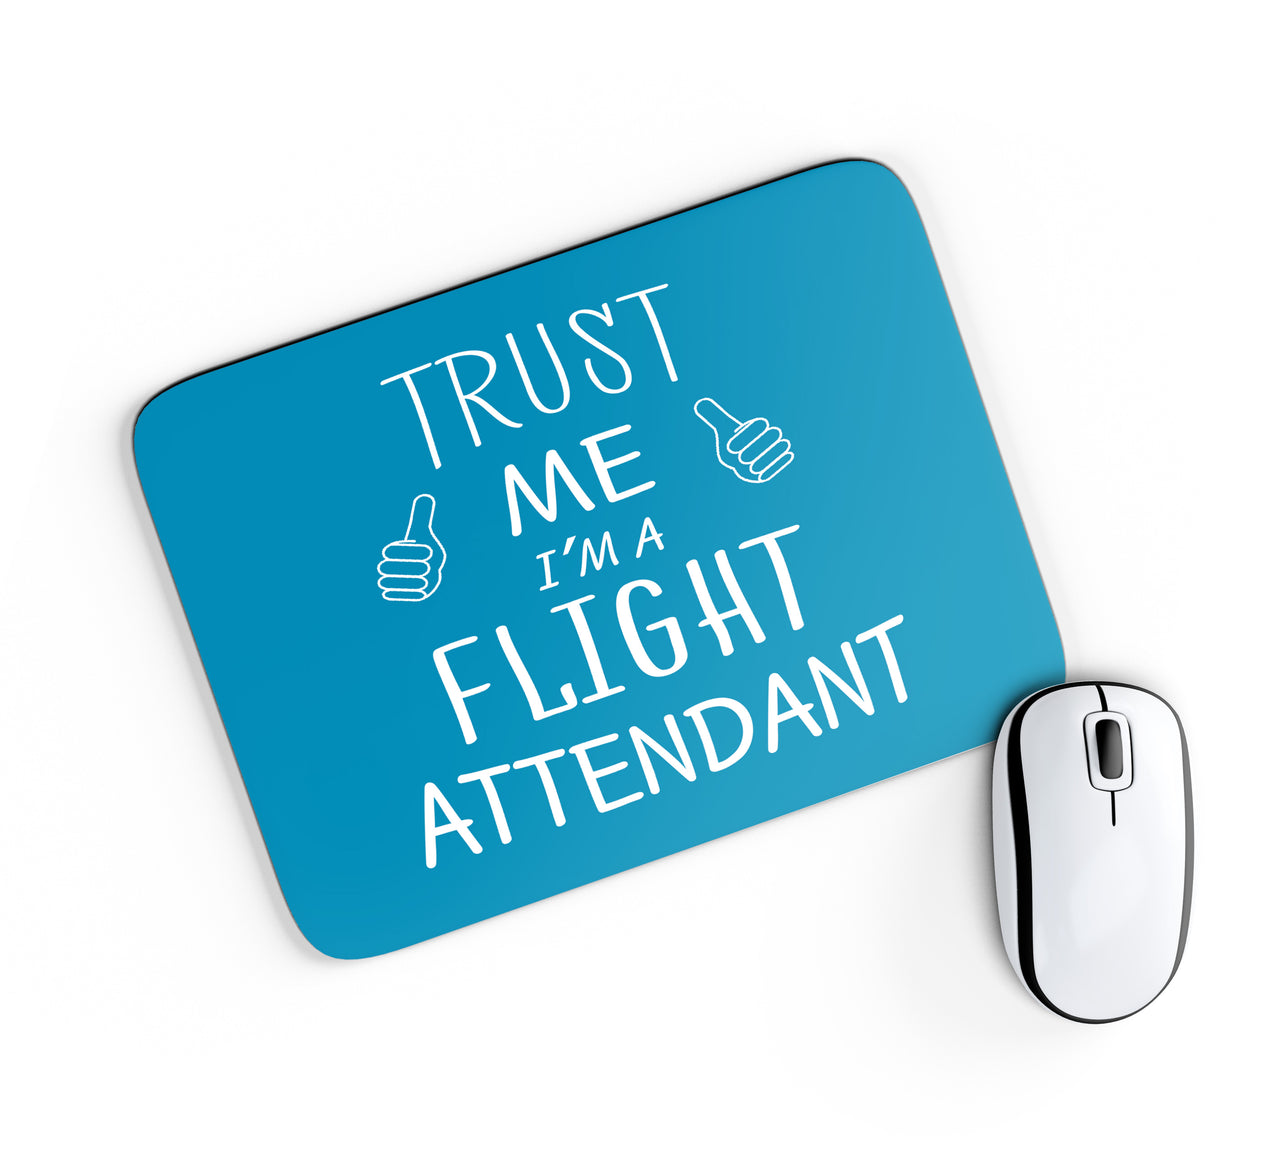 Trust Me I'm a Flight Attendant Designed Mouse Pads